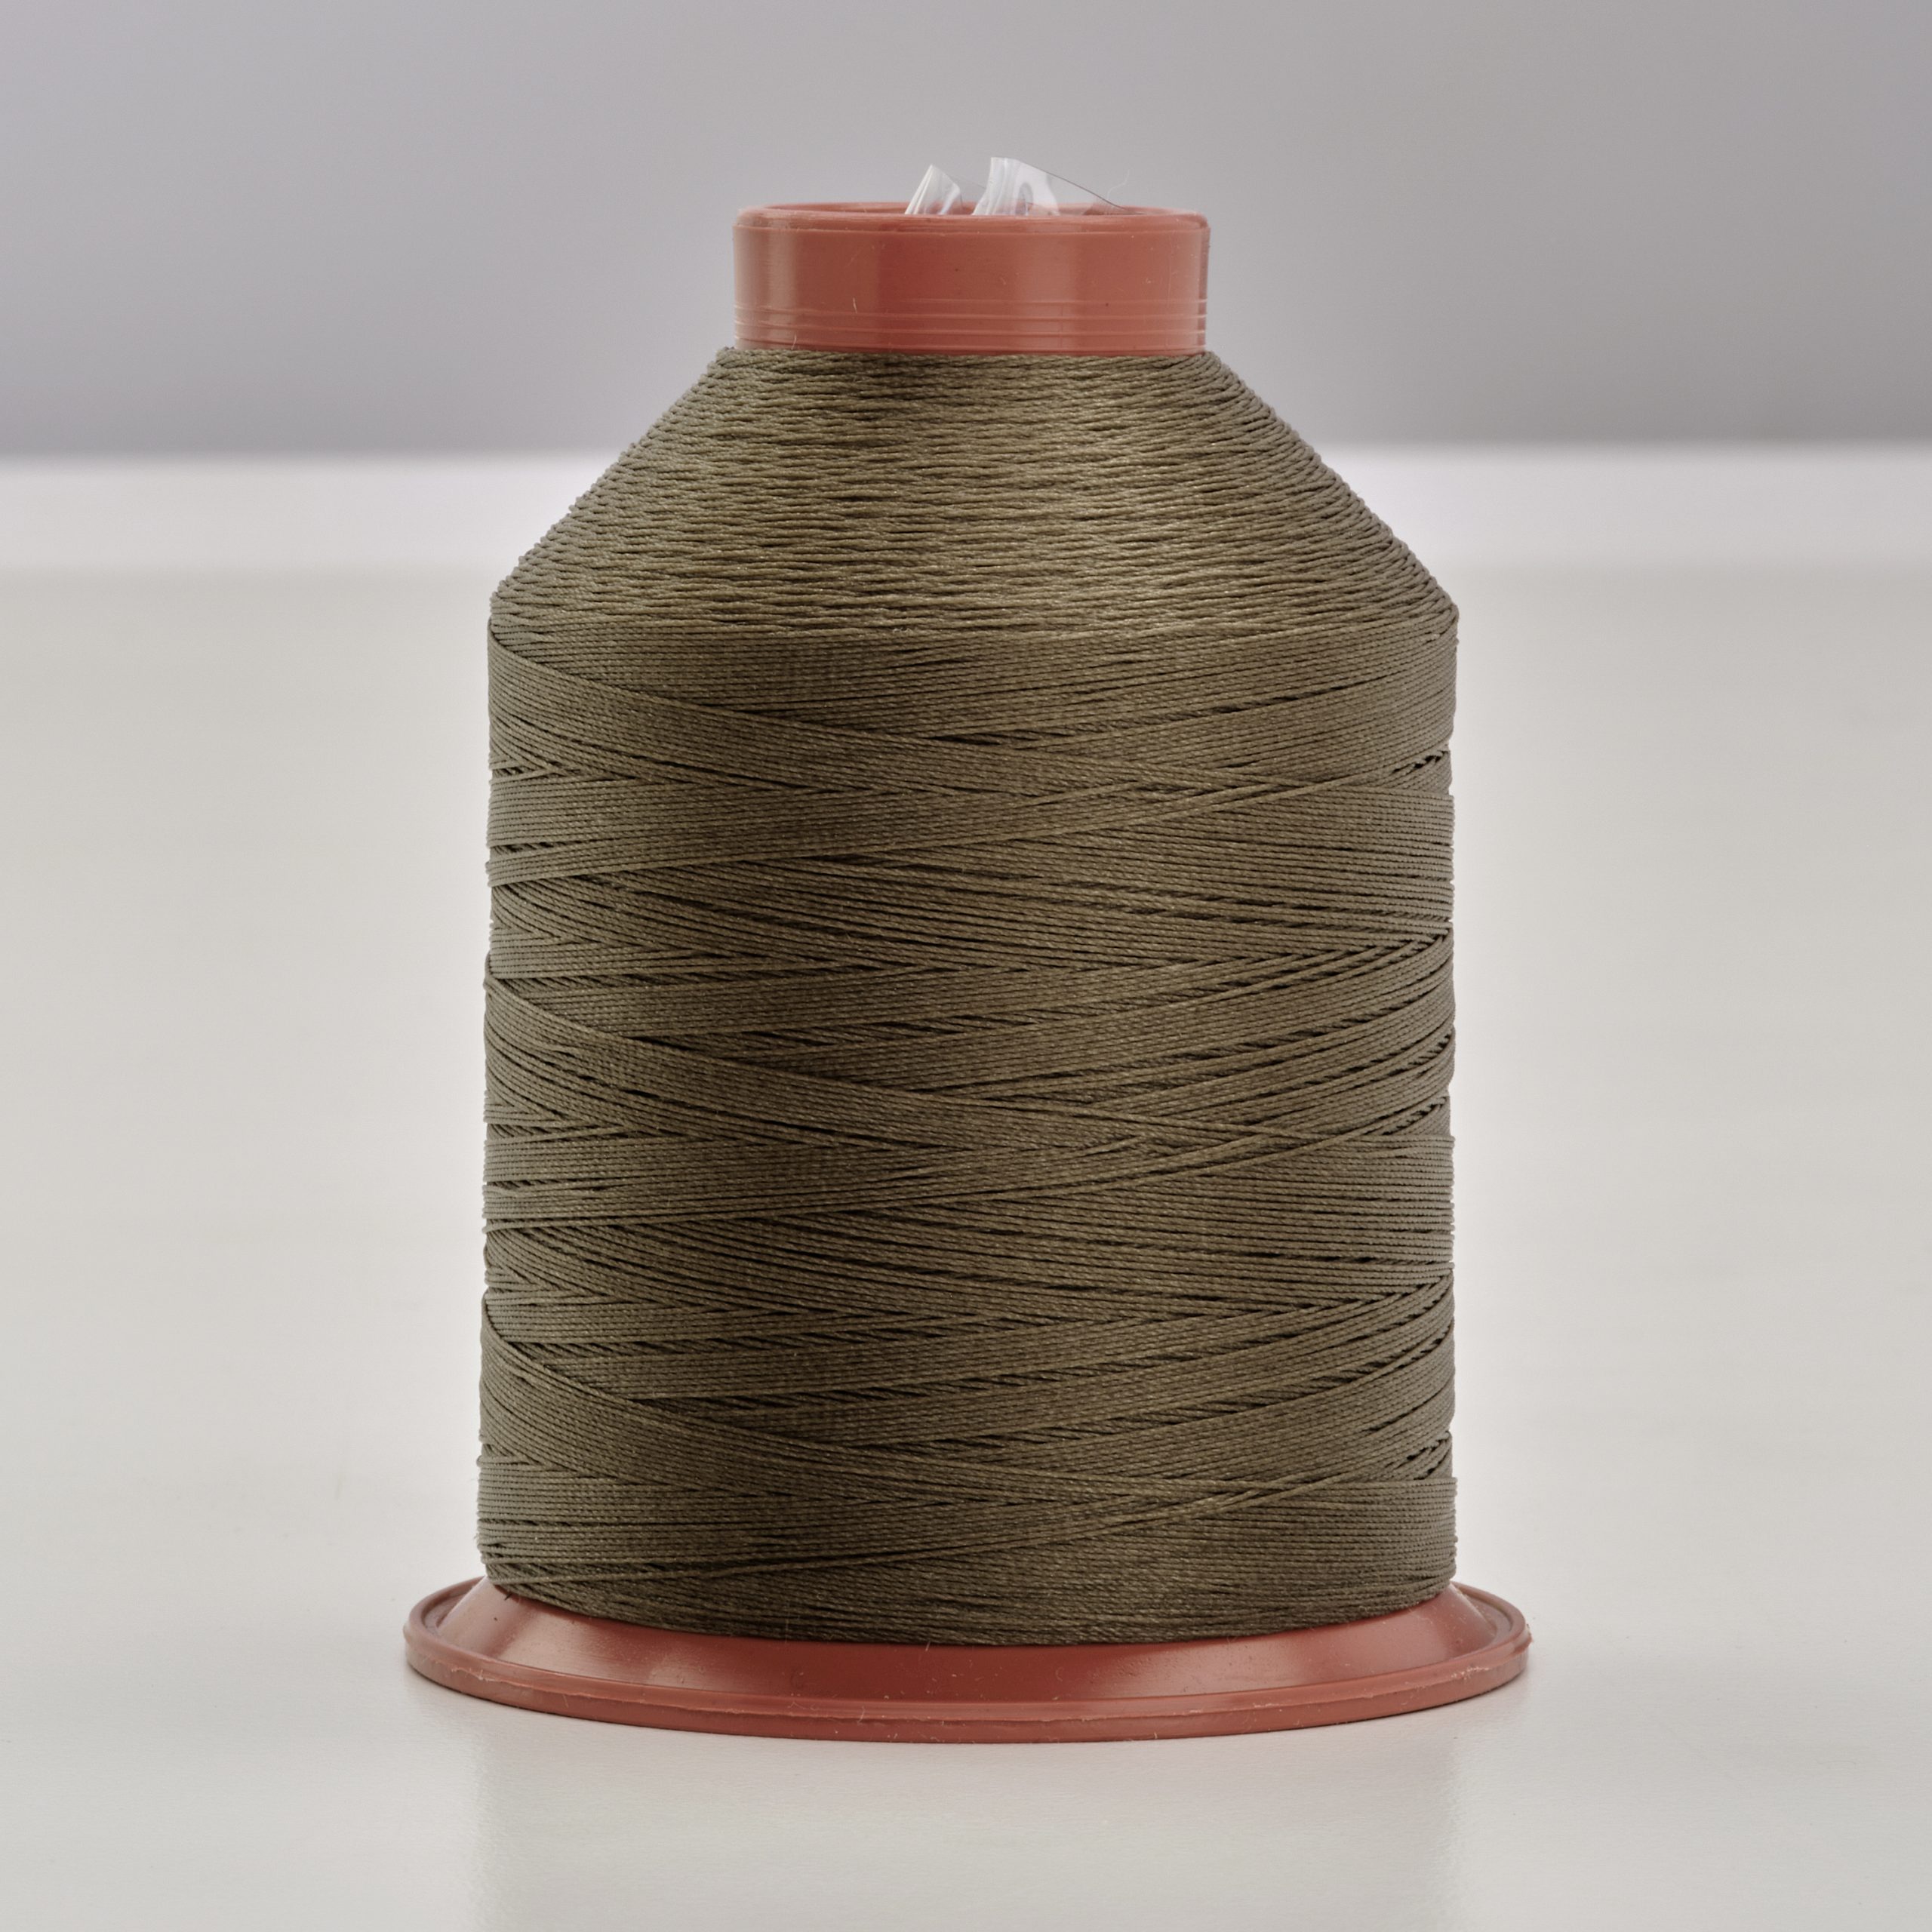 Bonded Nylon Thread